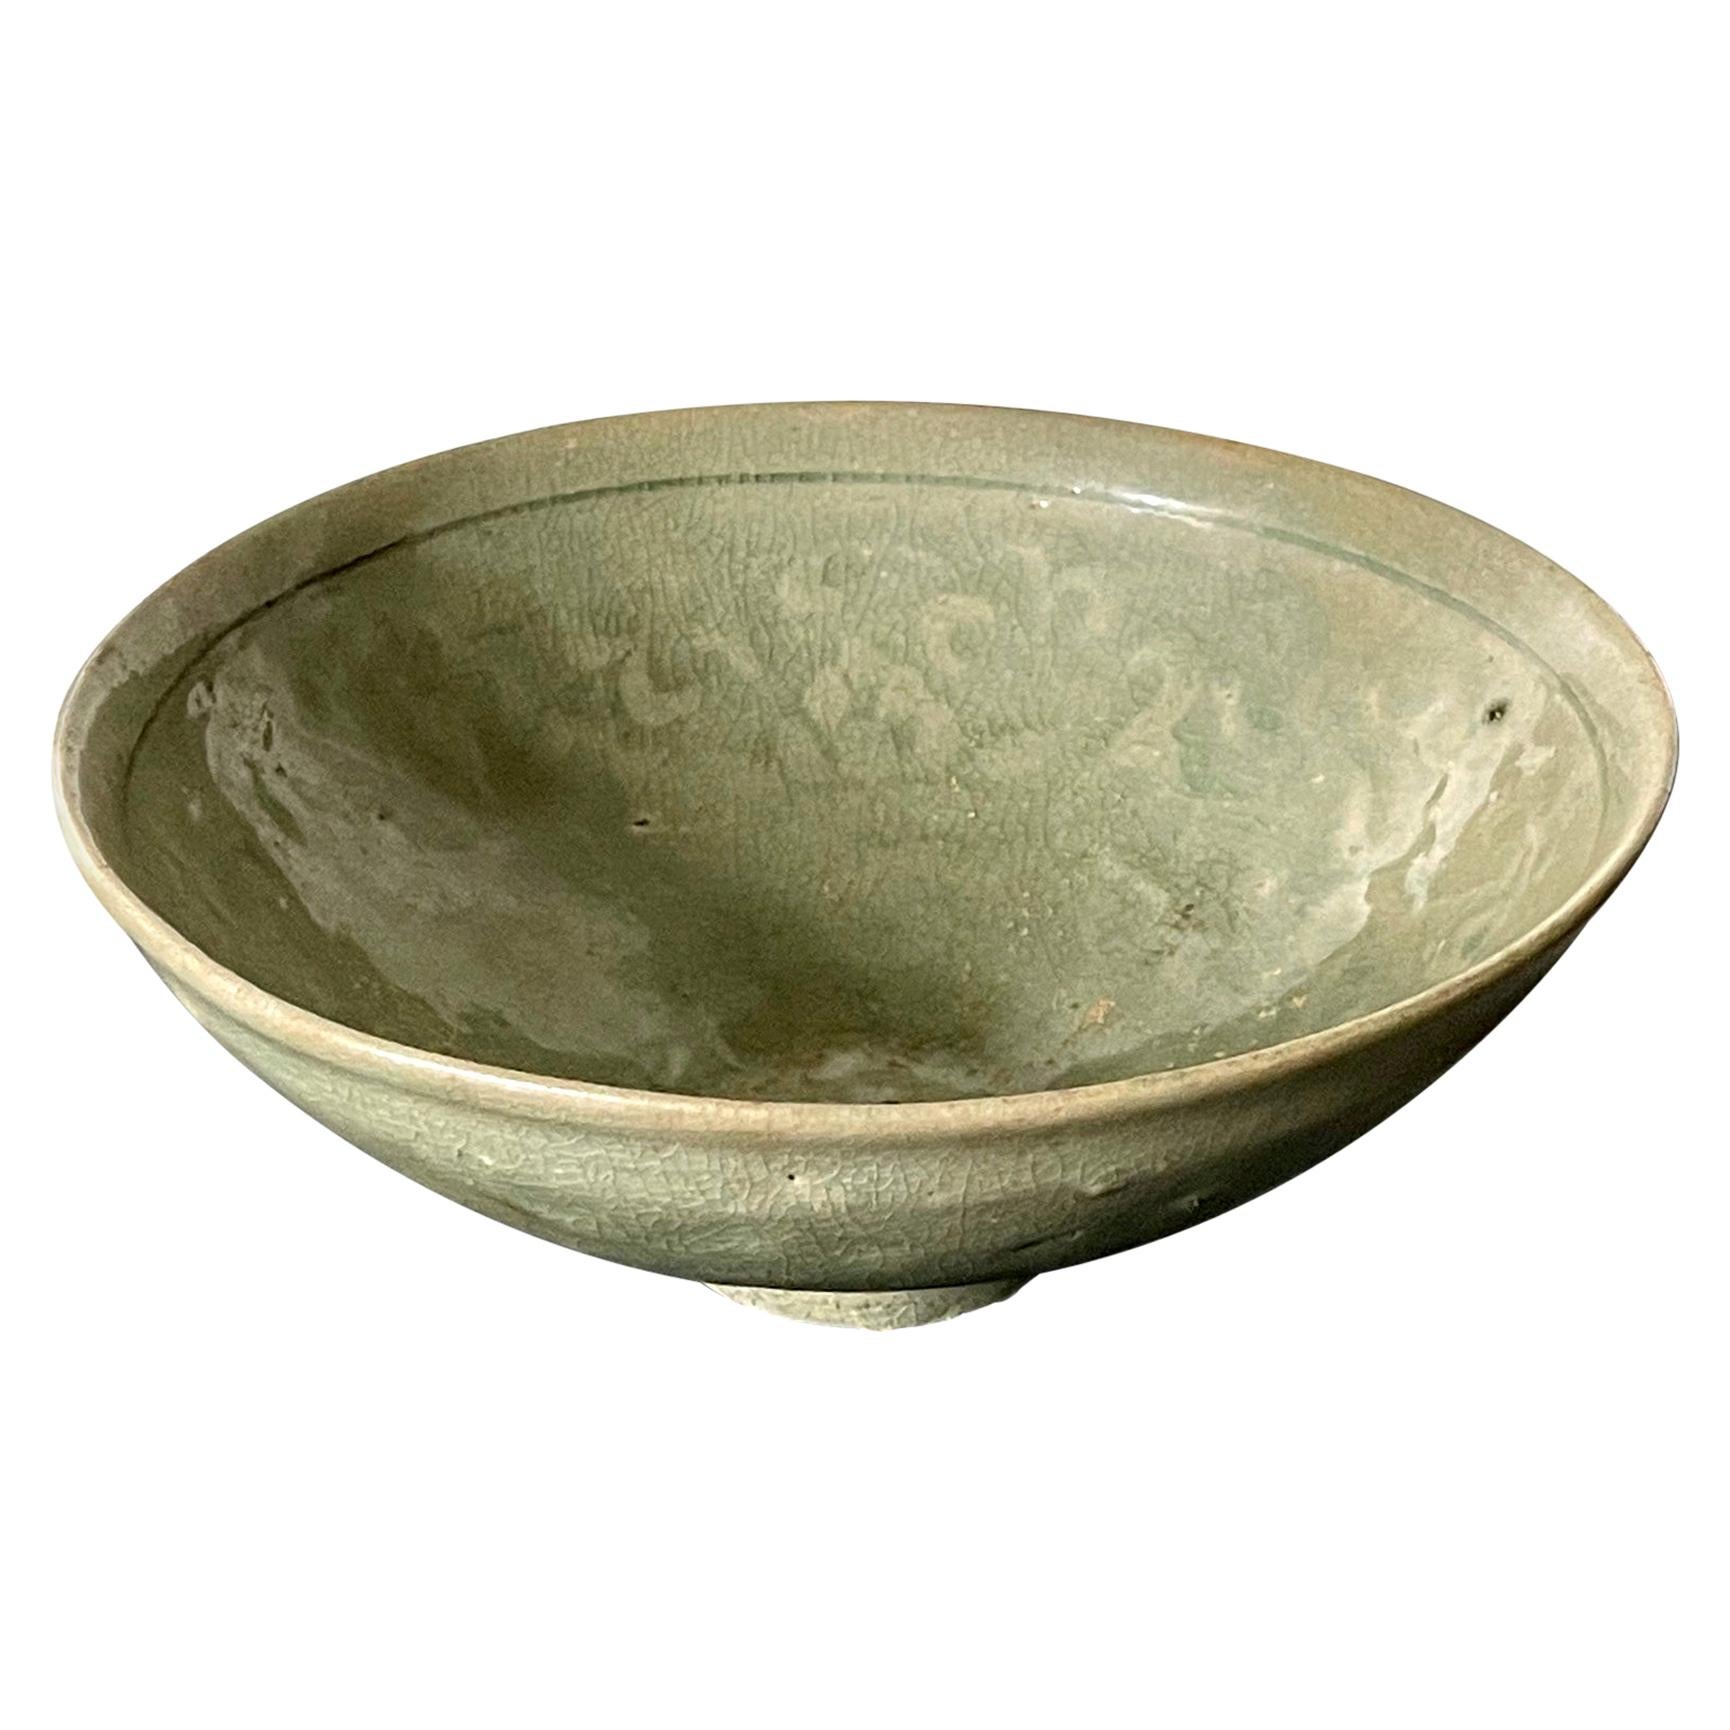 Bol coréen ancien en céramique avec motif incisé 